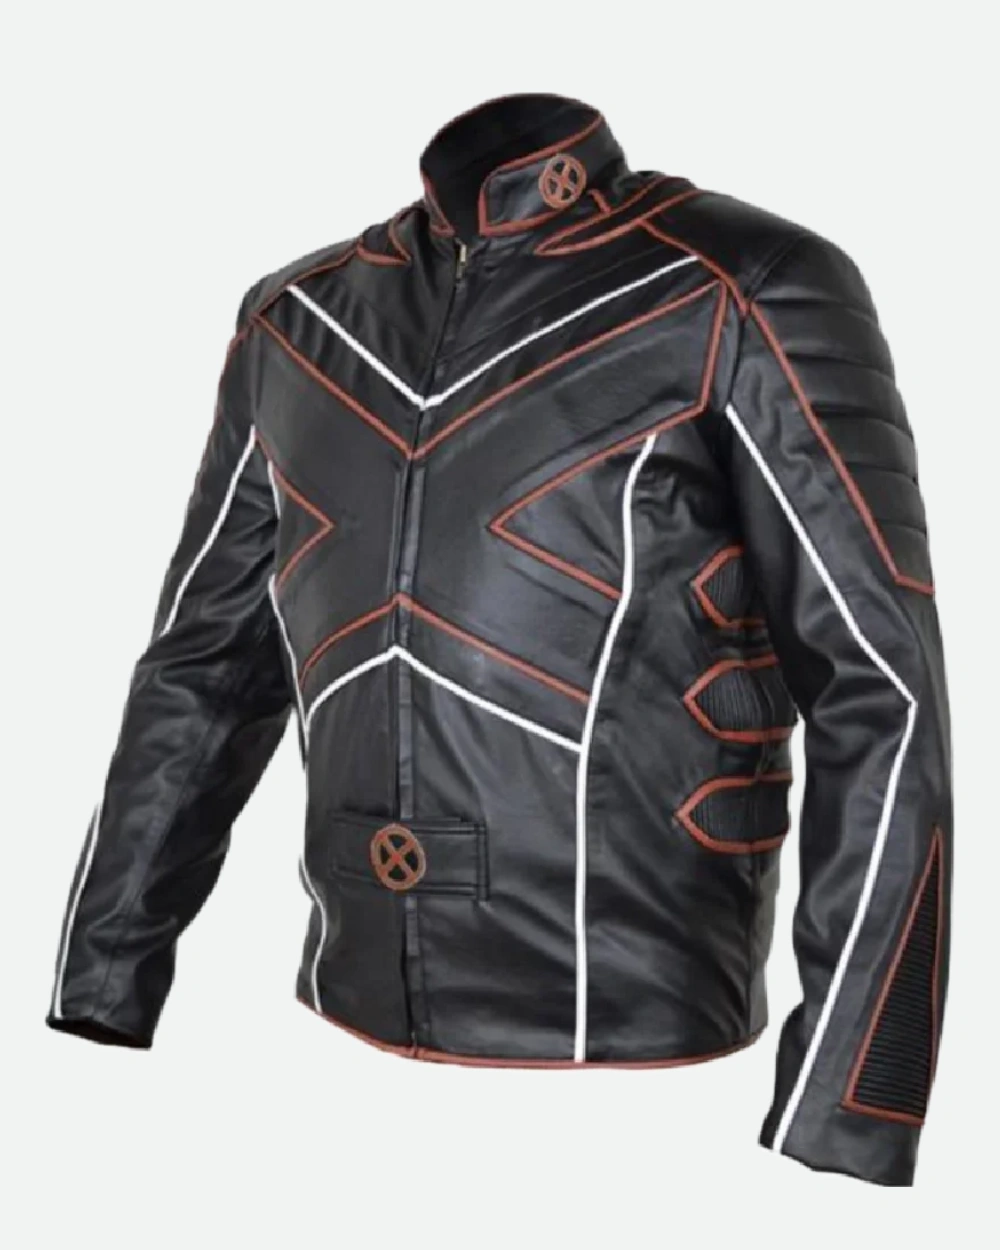 X-Men 2 United Wolverine Motorcycle Jacket Side Pose